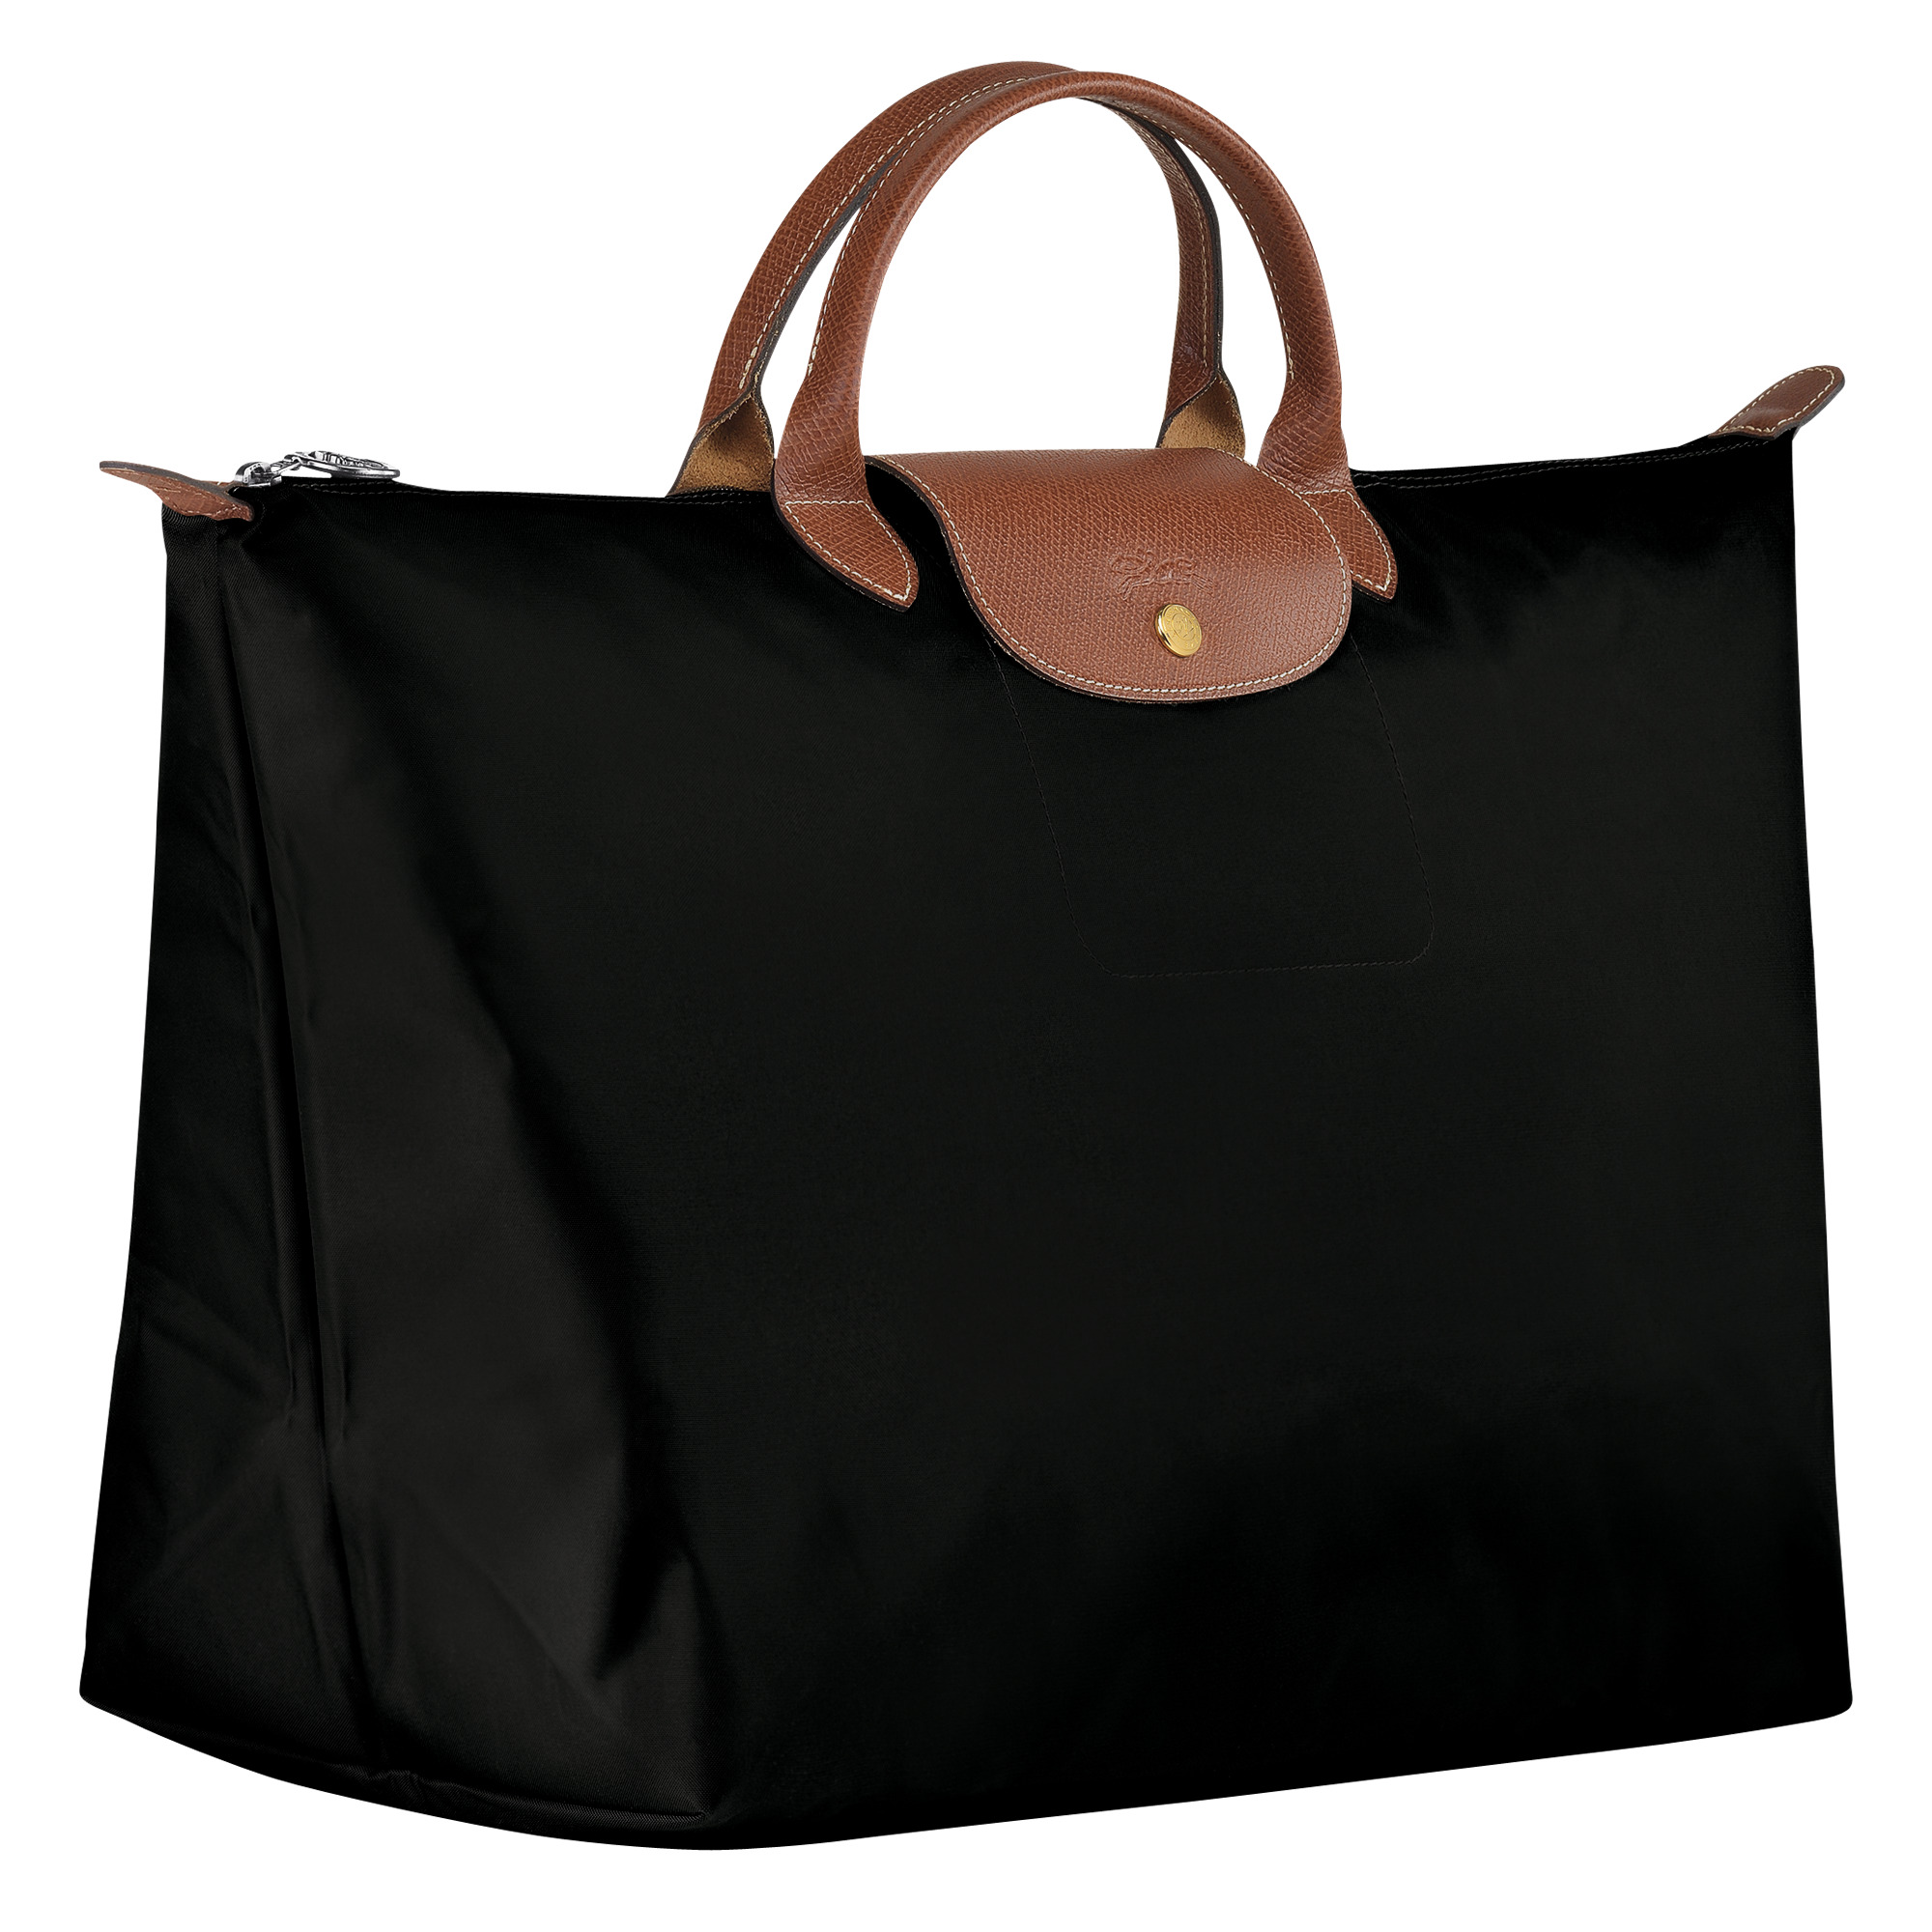 Le Pliage Original S Travel bag Black - Recycled canvas - 3